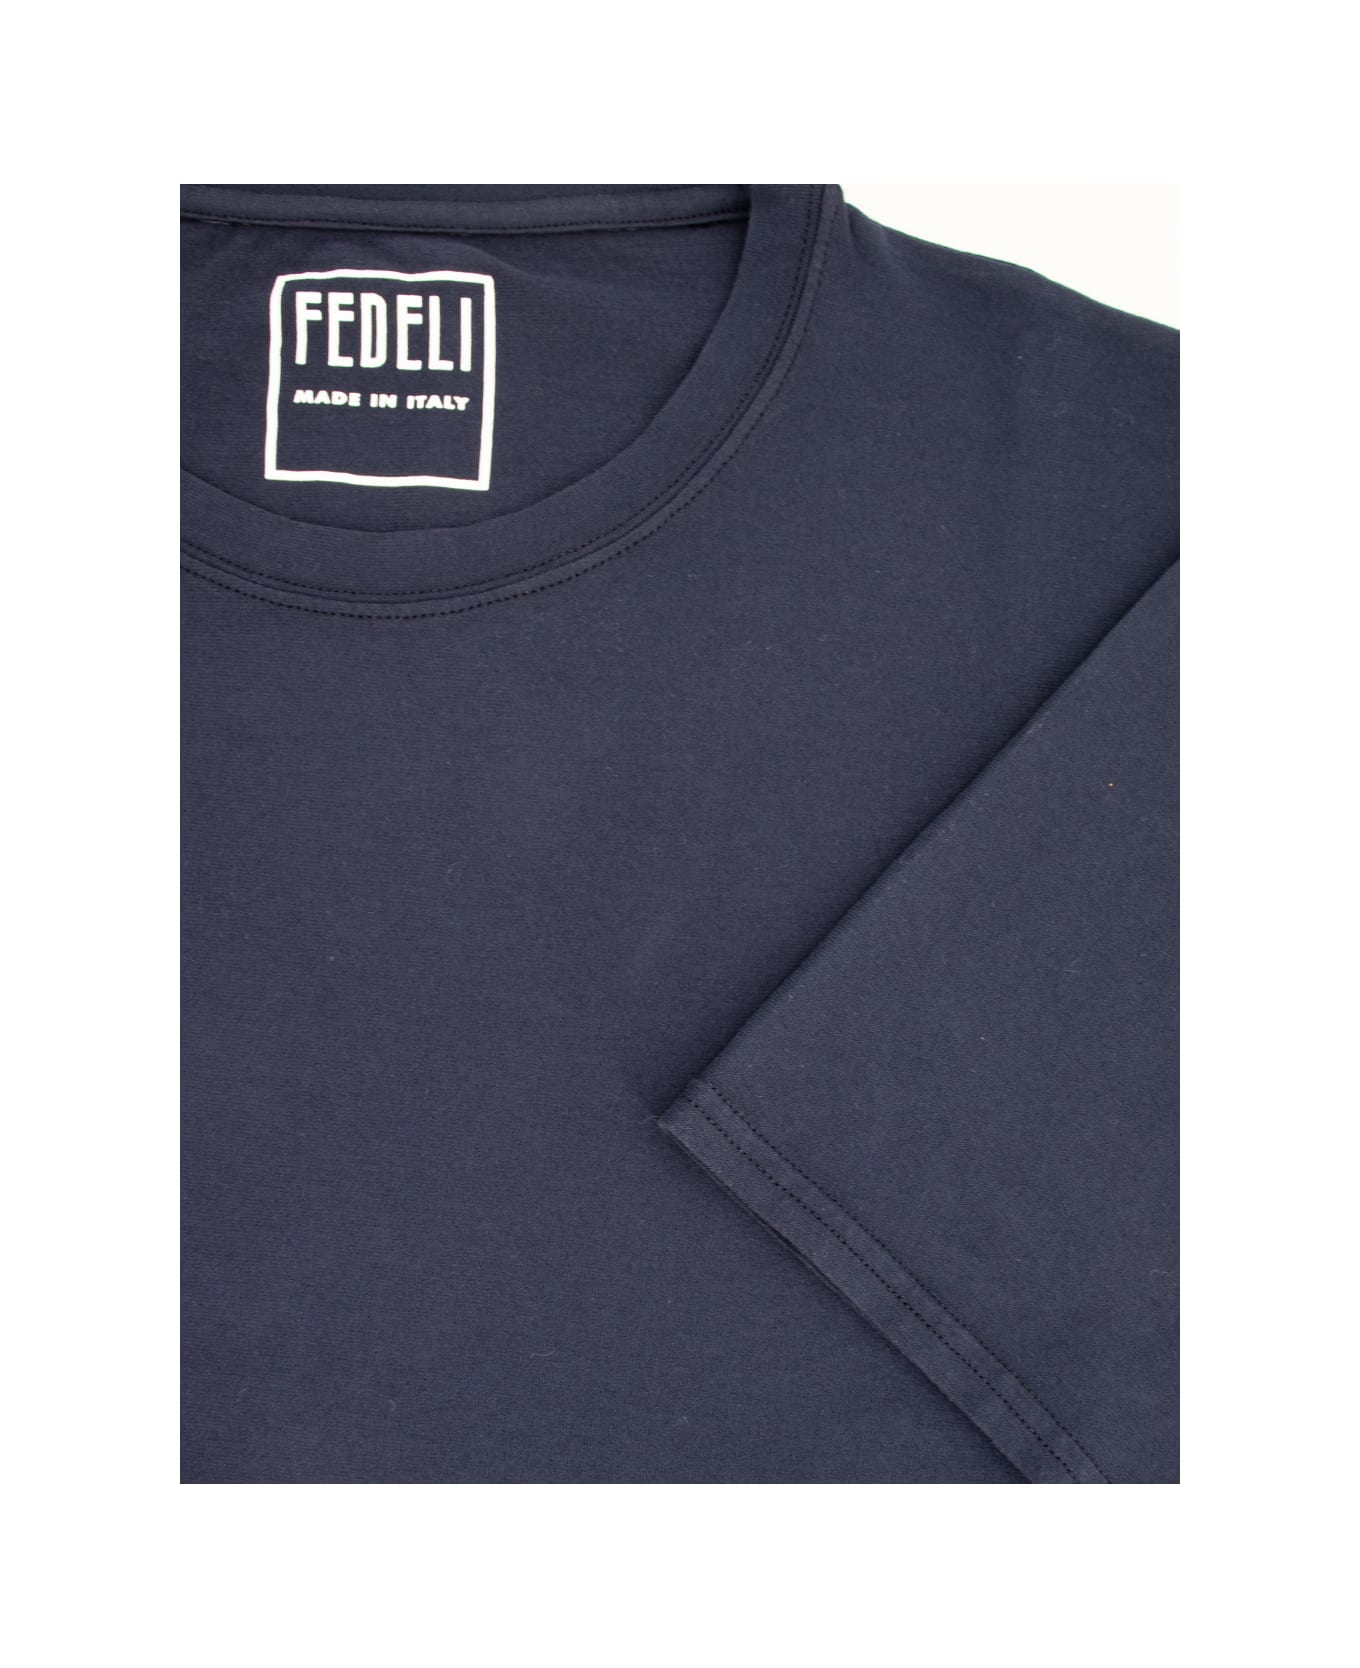 Fedeli T-shirt - 626 シャツ